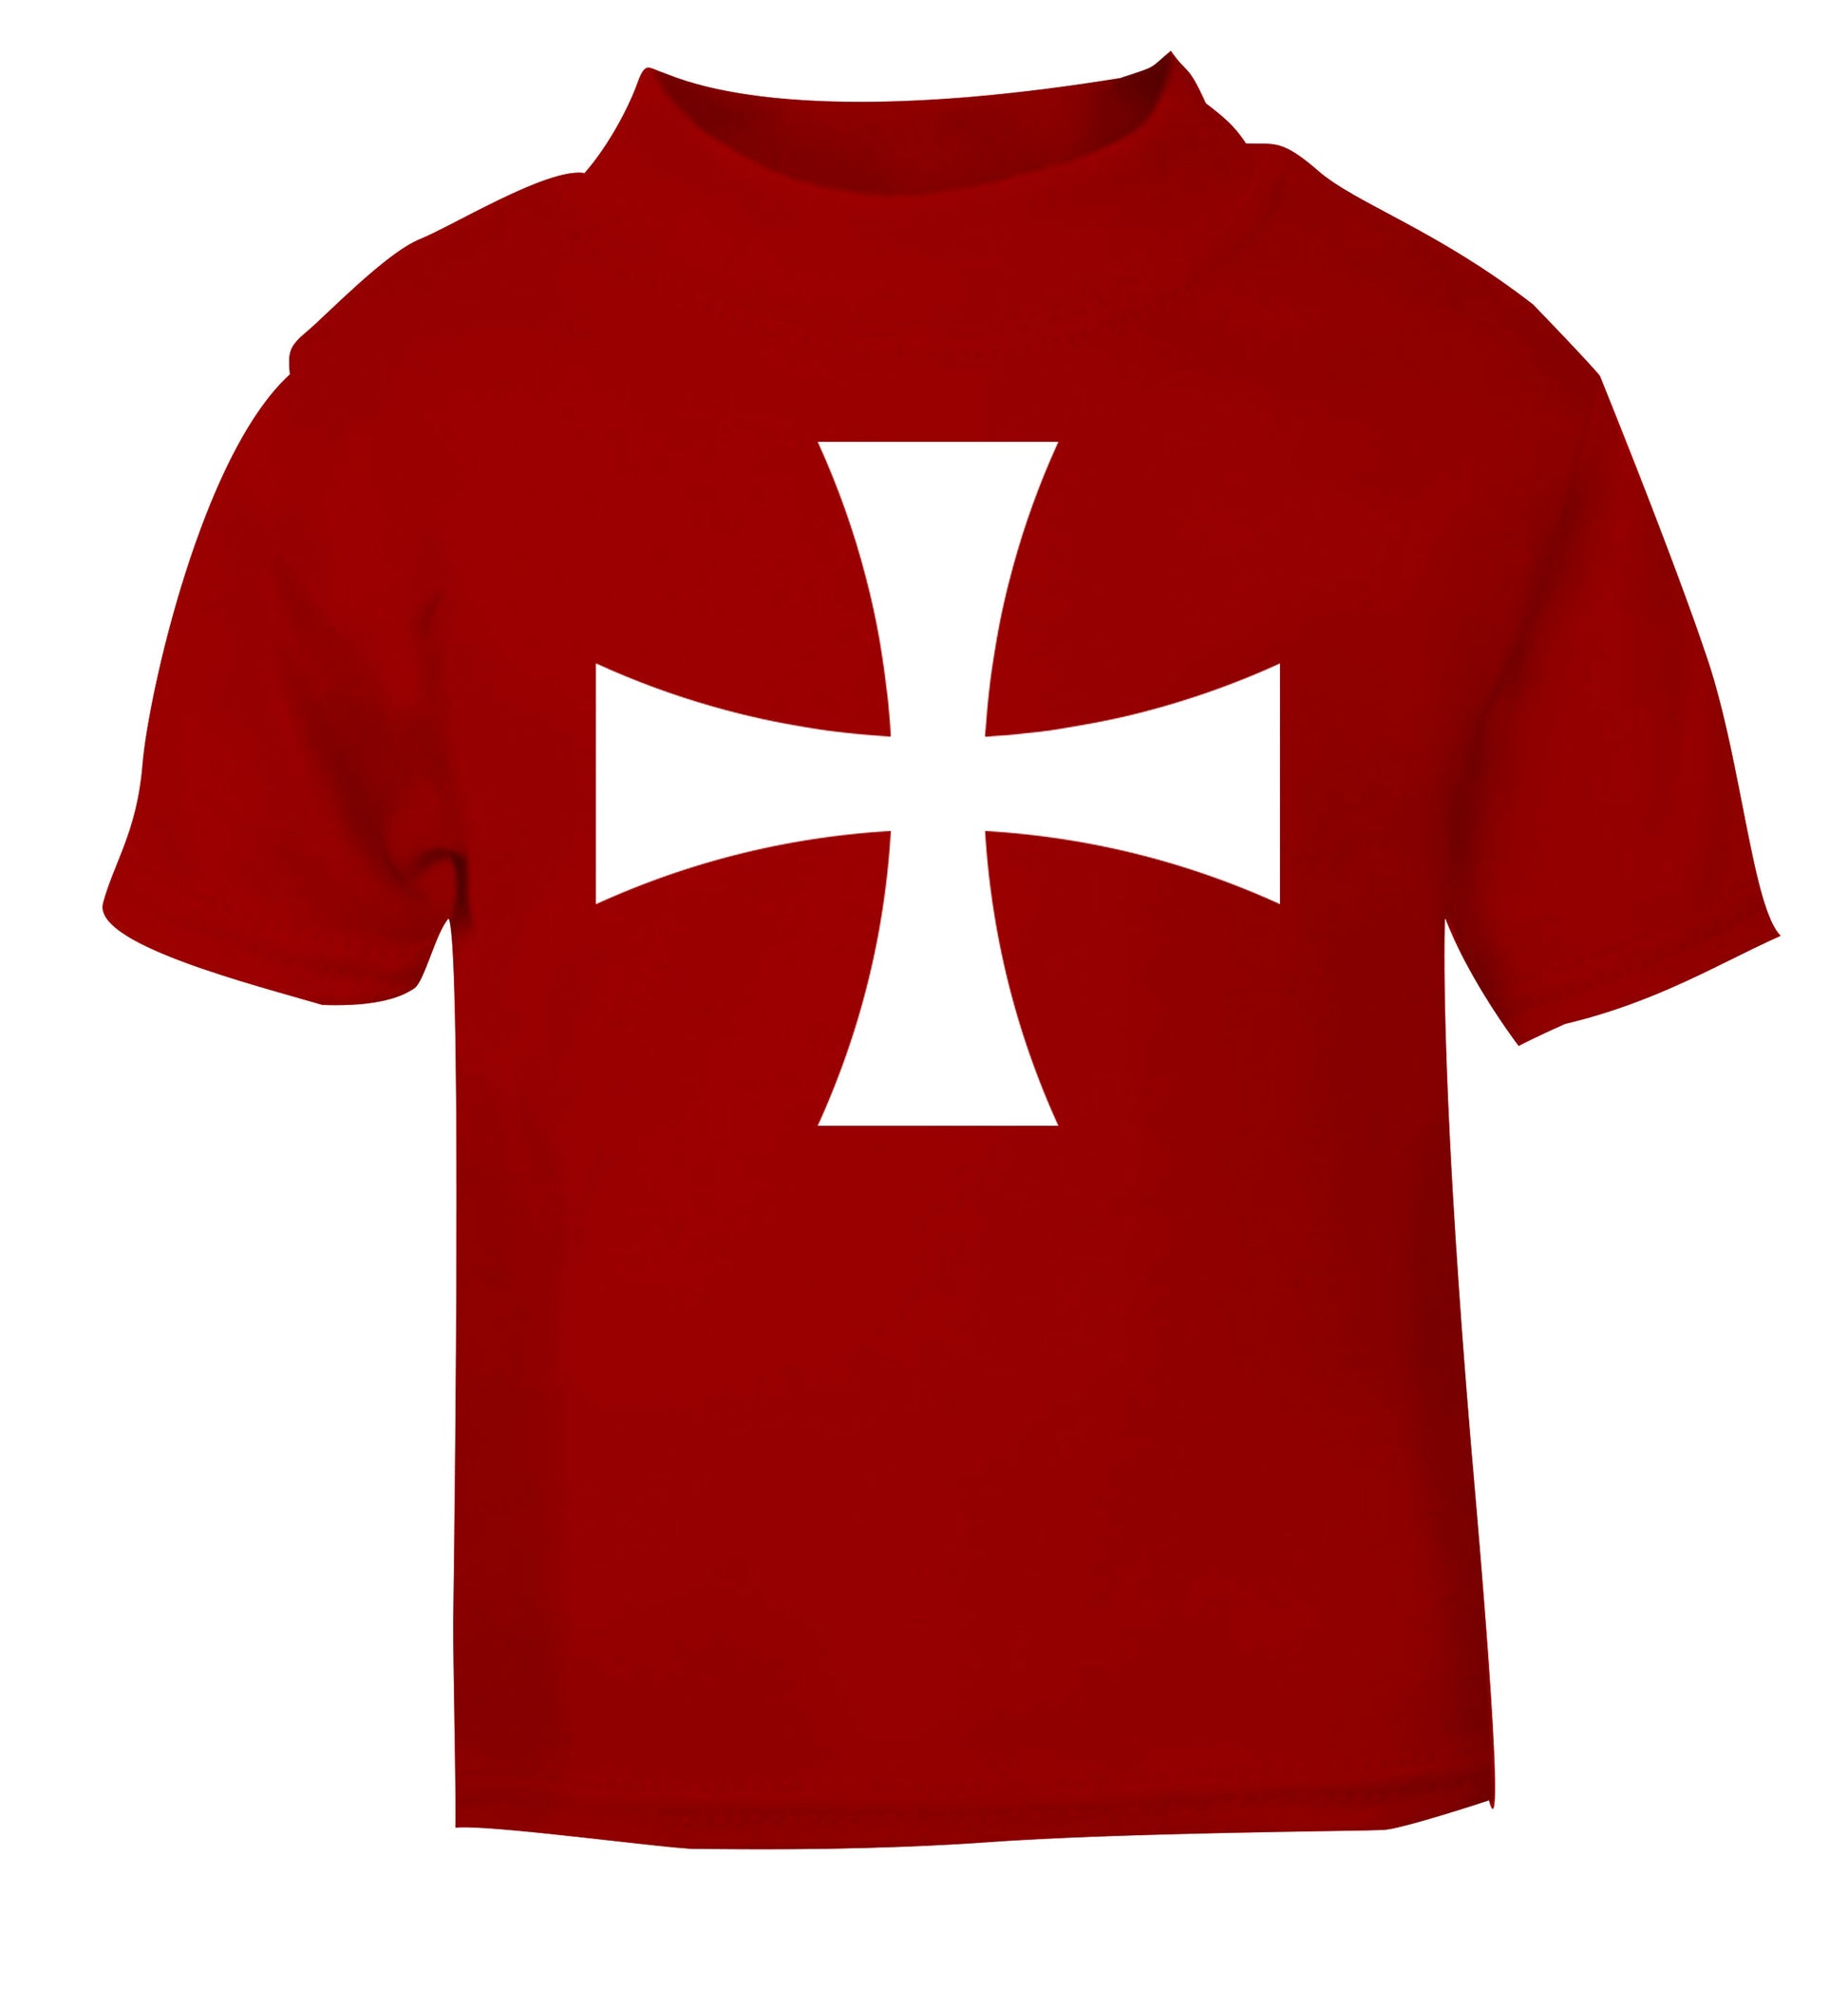 Knights Templar cross red Baby Toddler Tshirt 2 Years